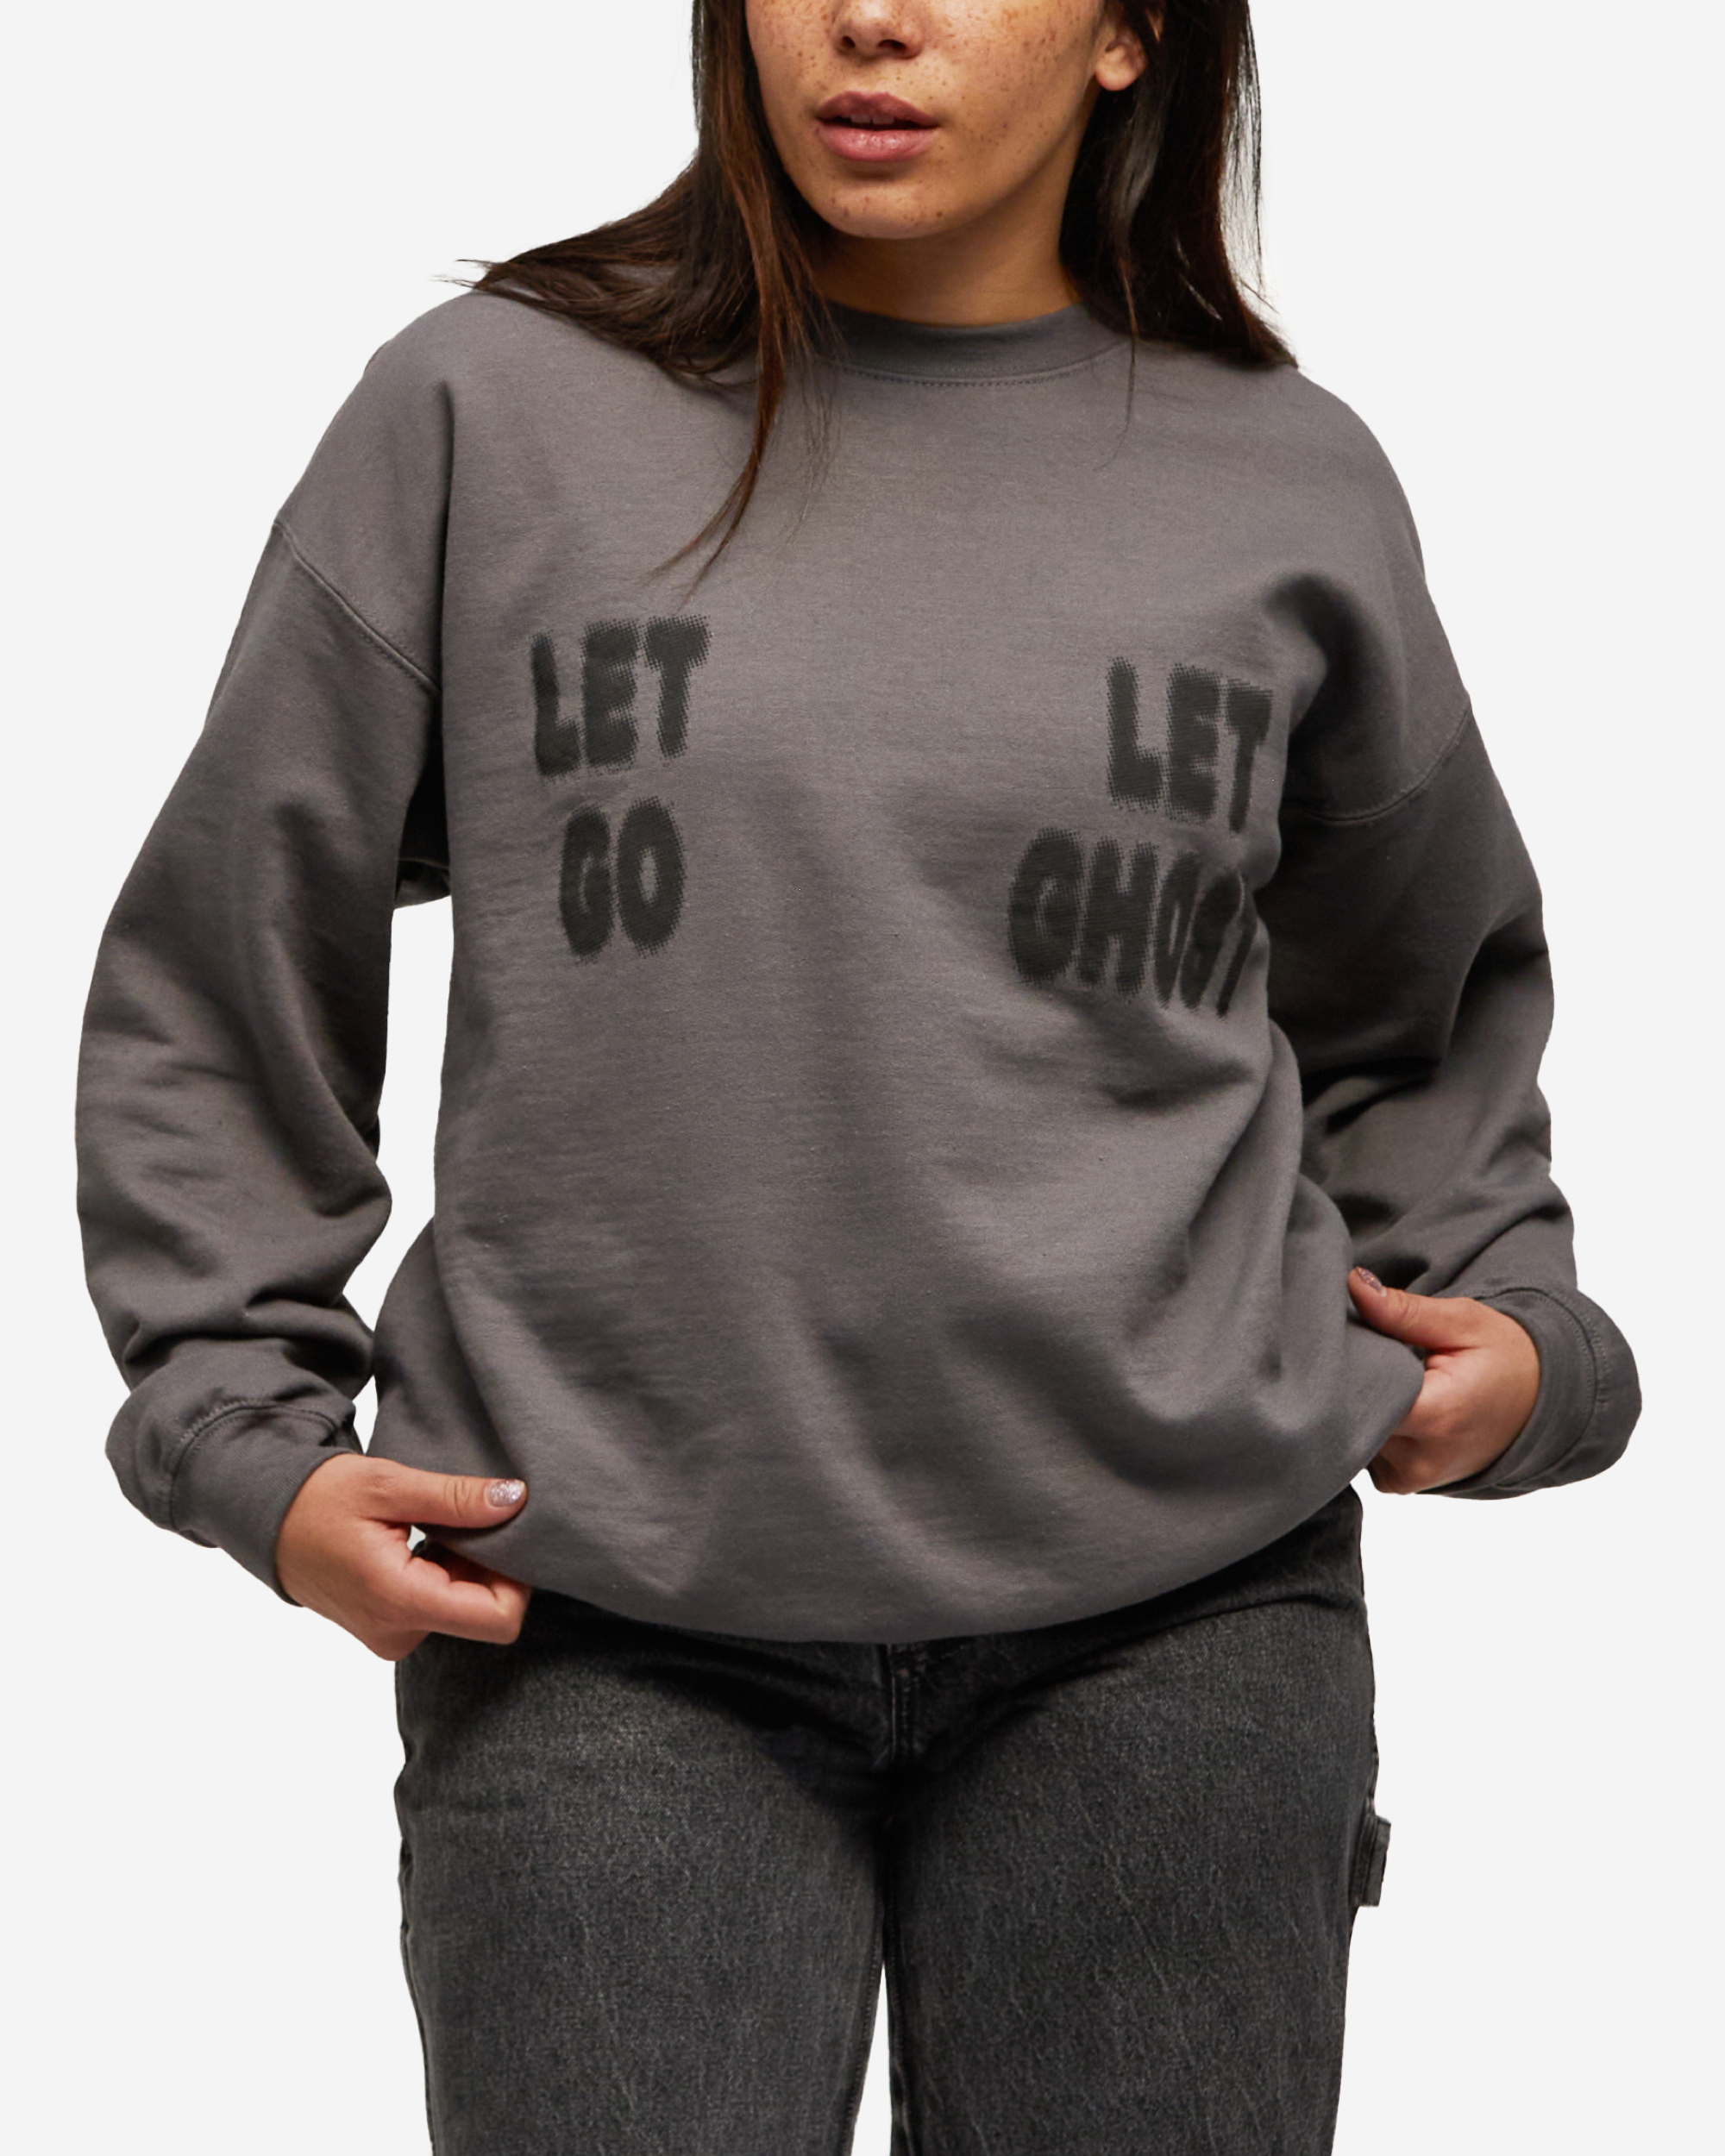 Let Go Let Ghost Crewneck